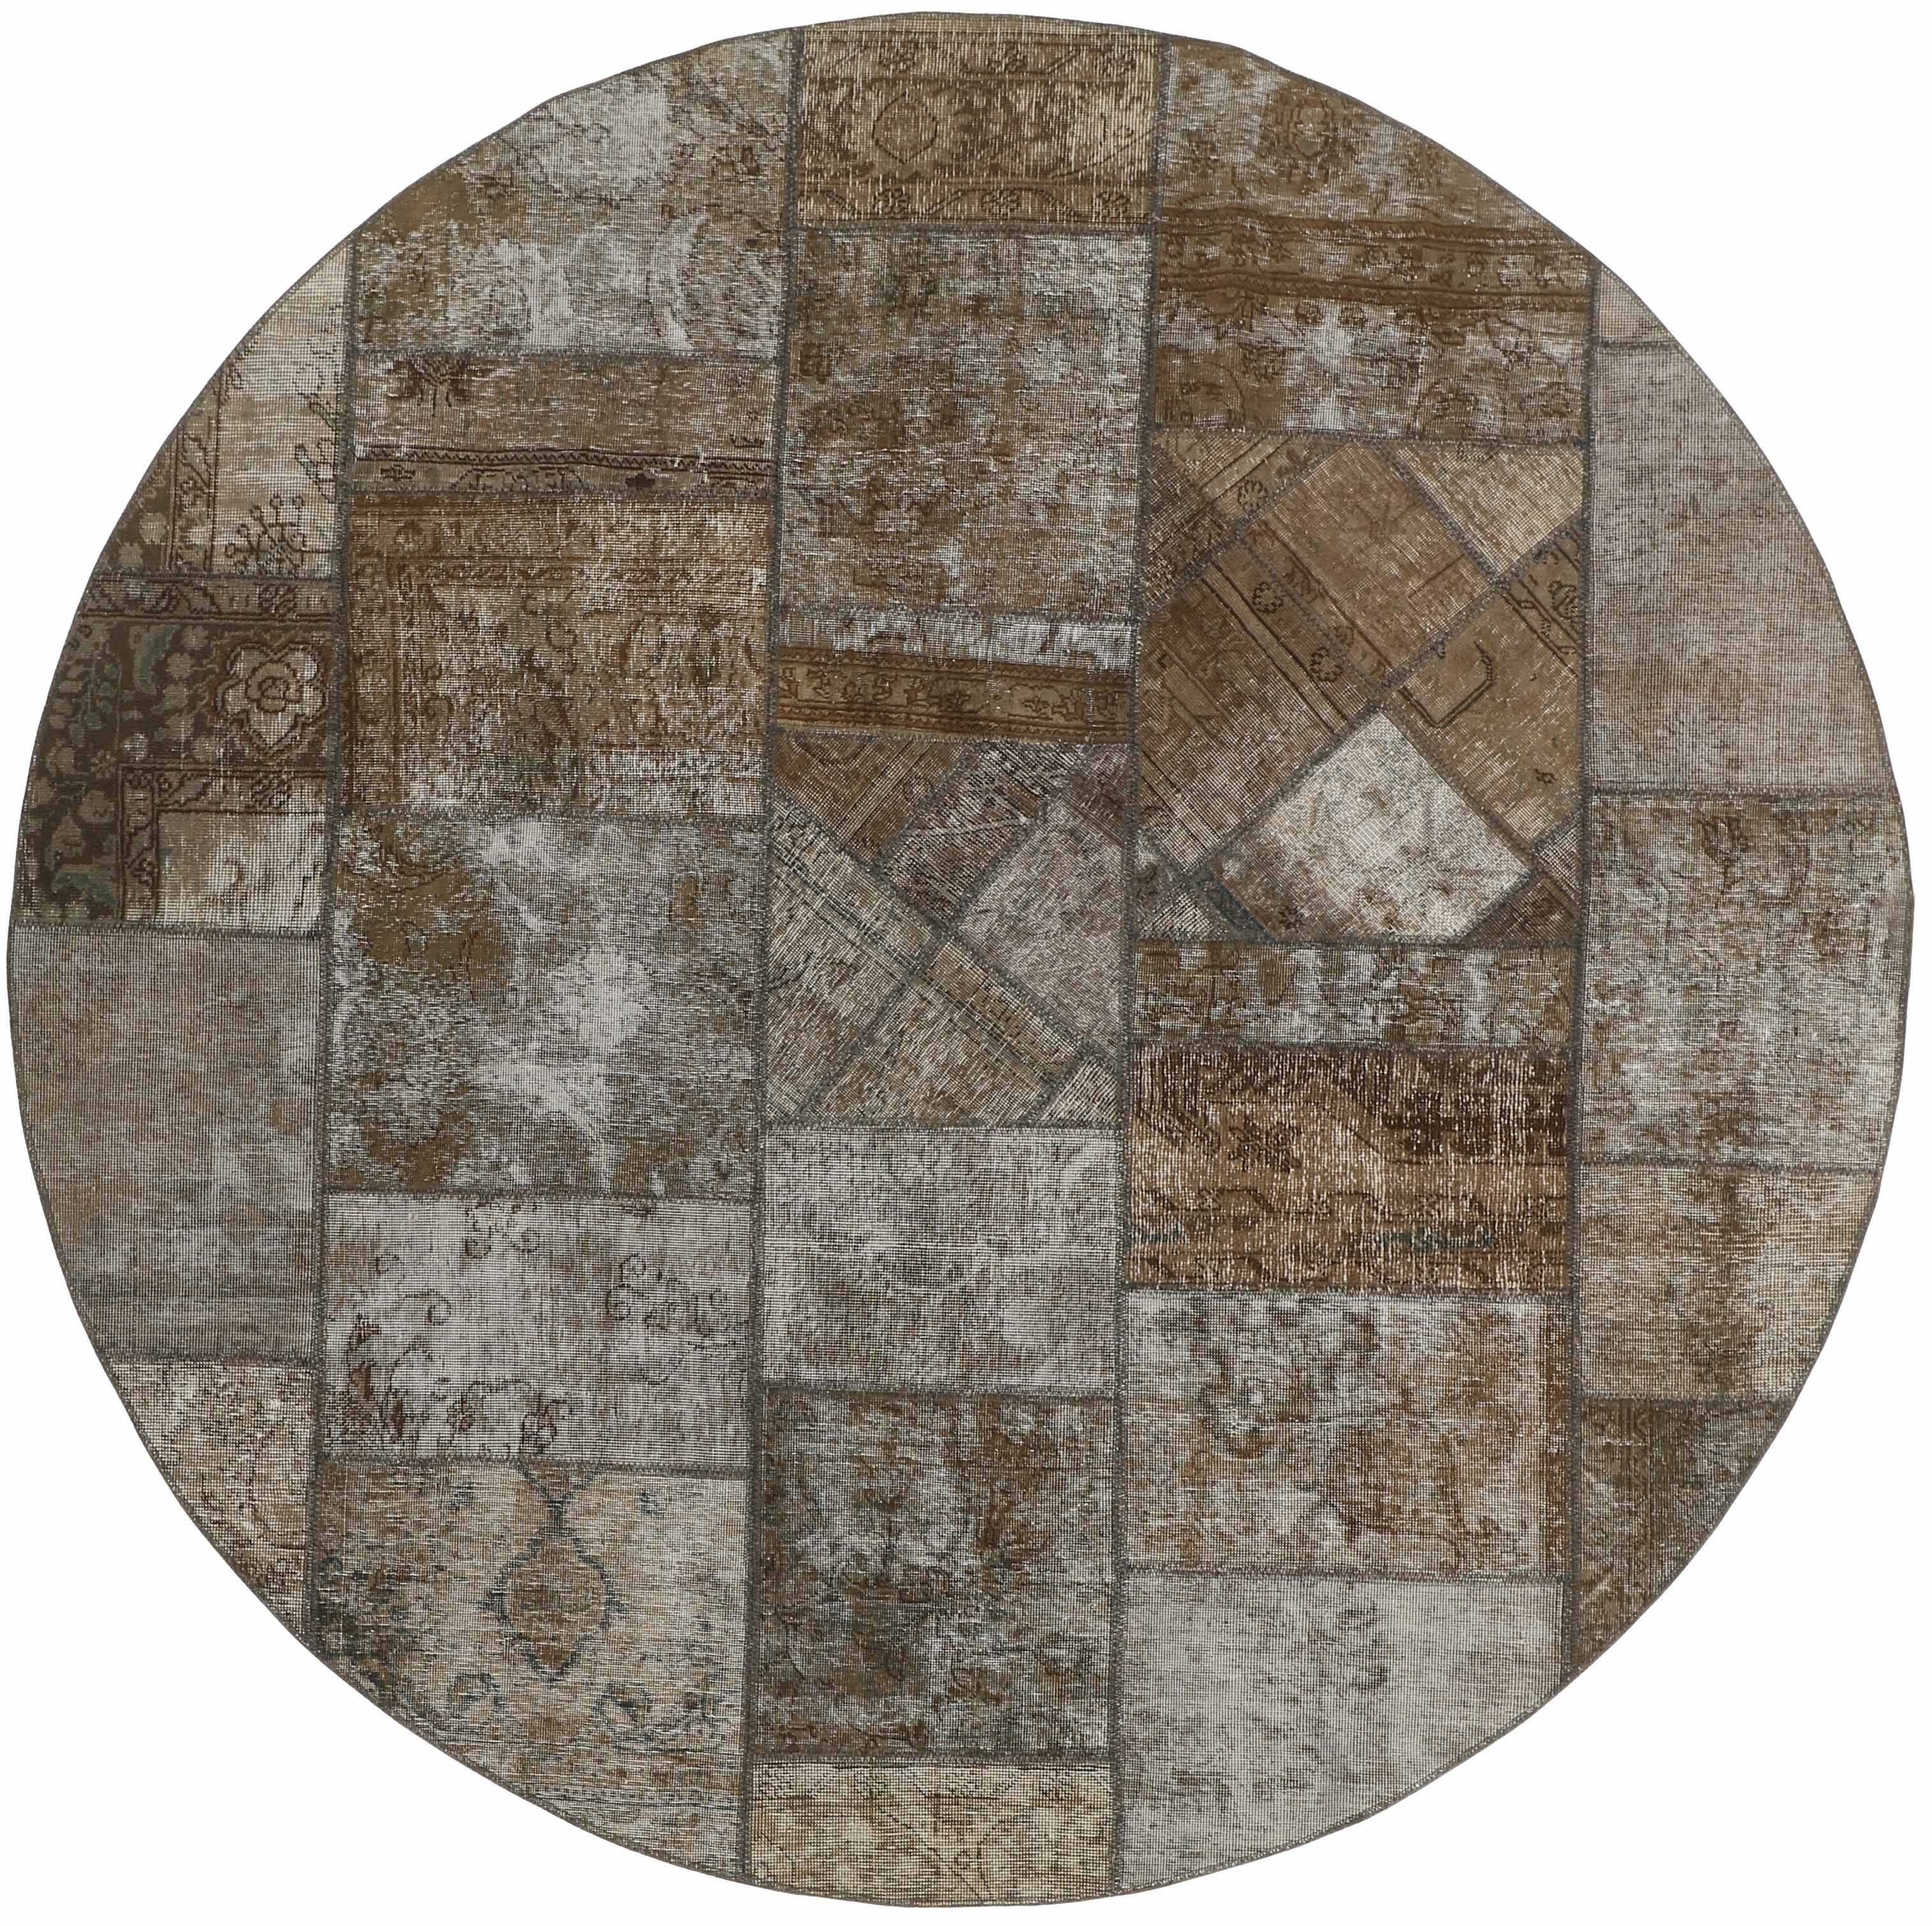 Authentic black patchwork persian circle rug